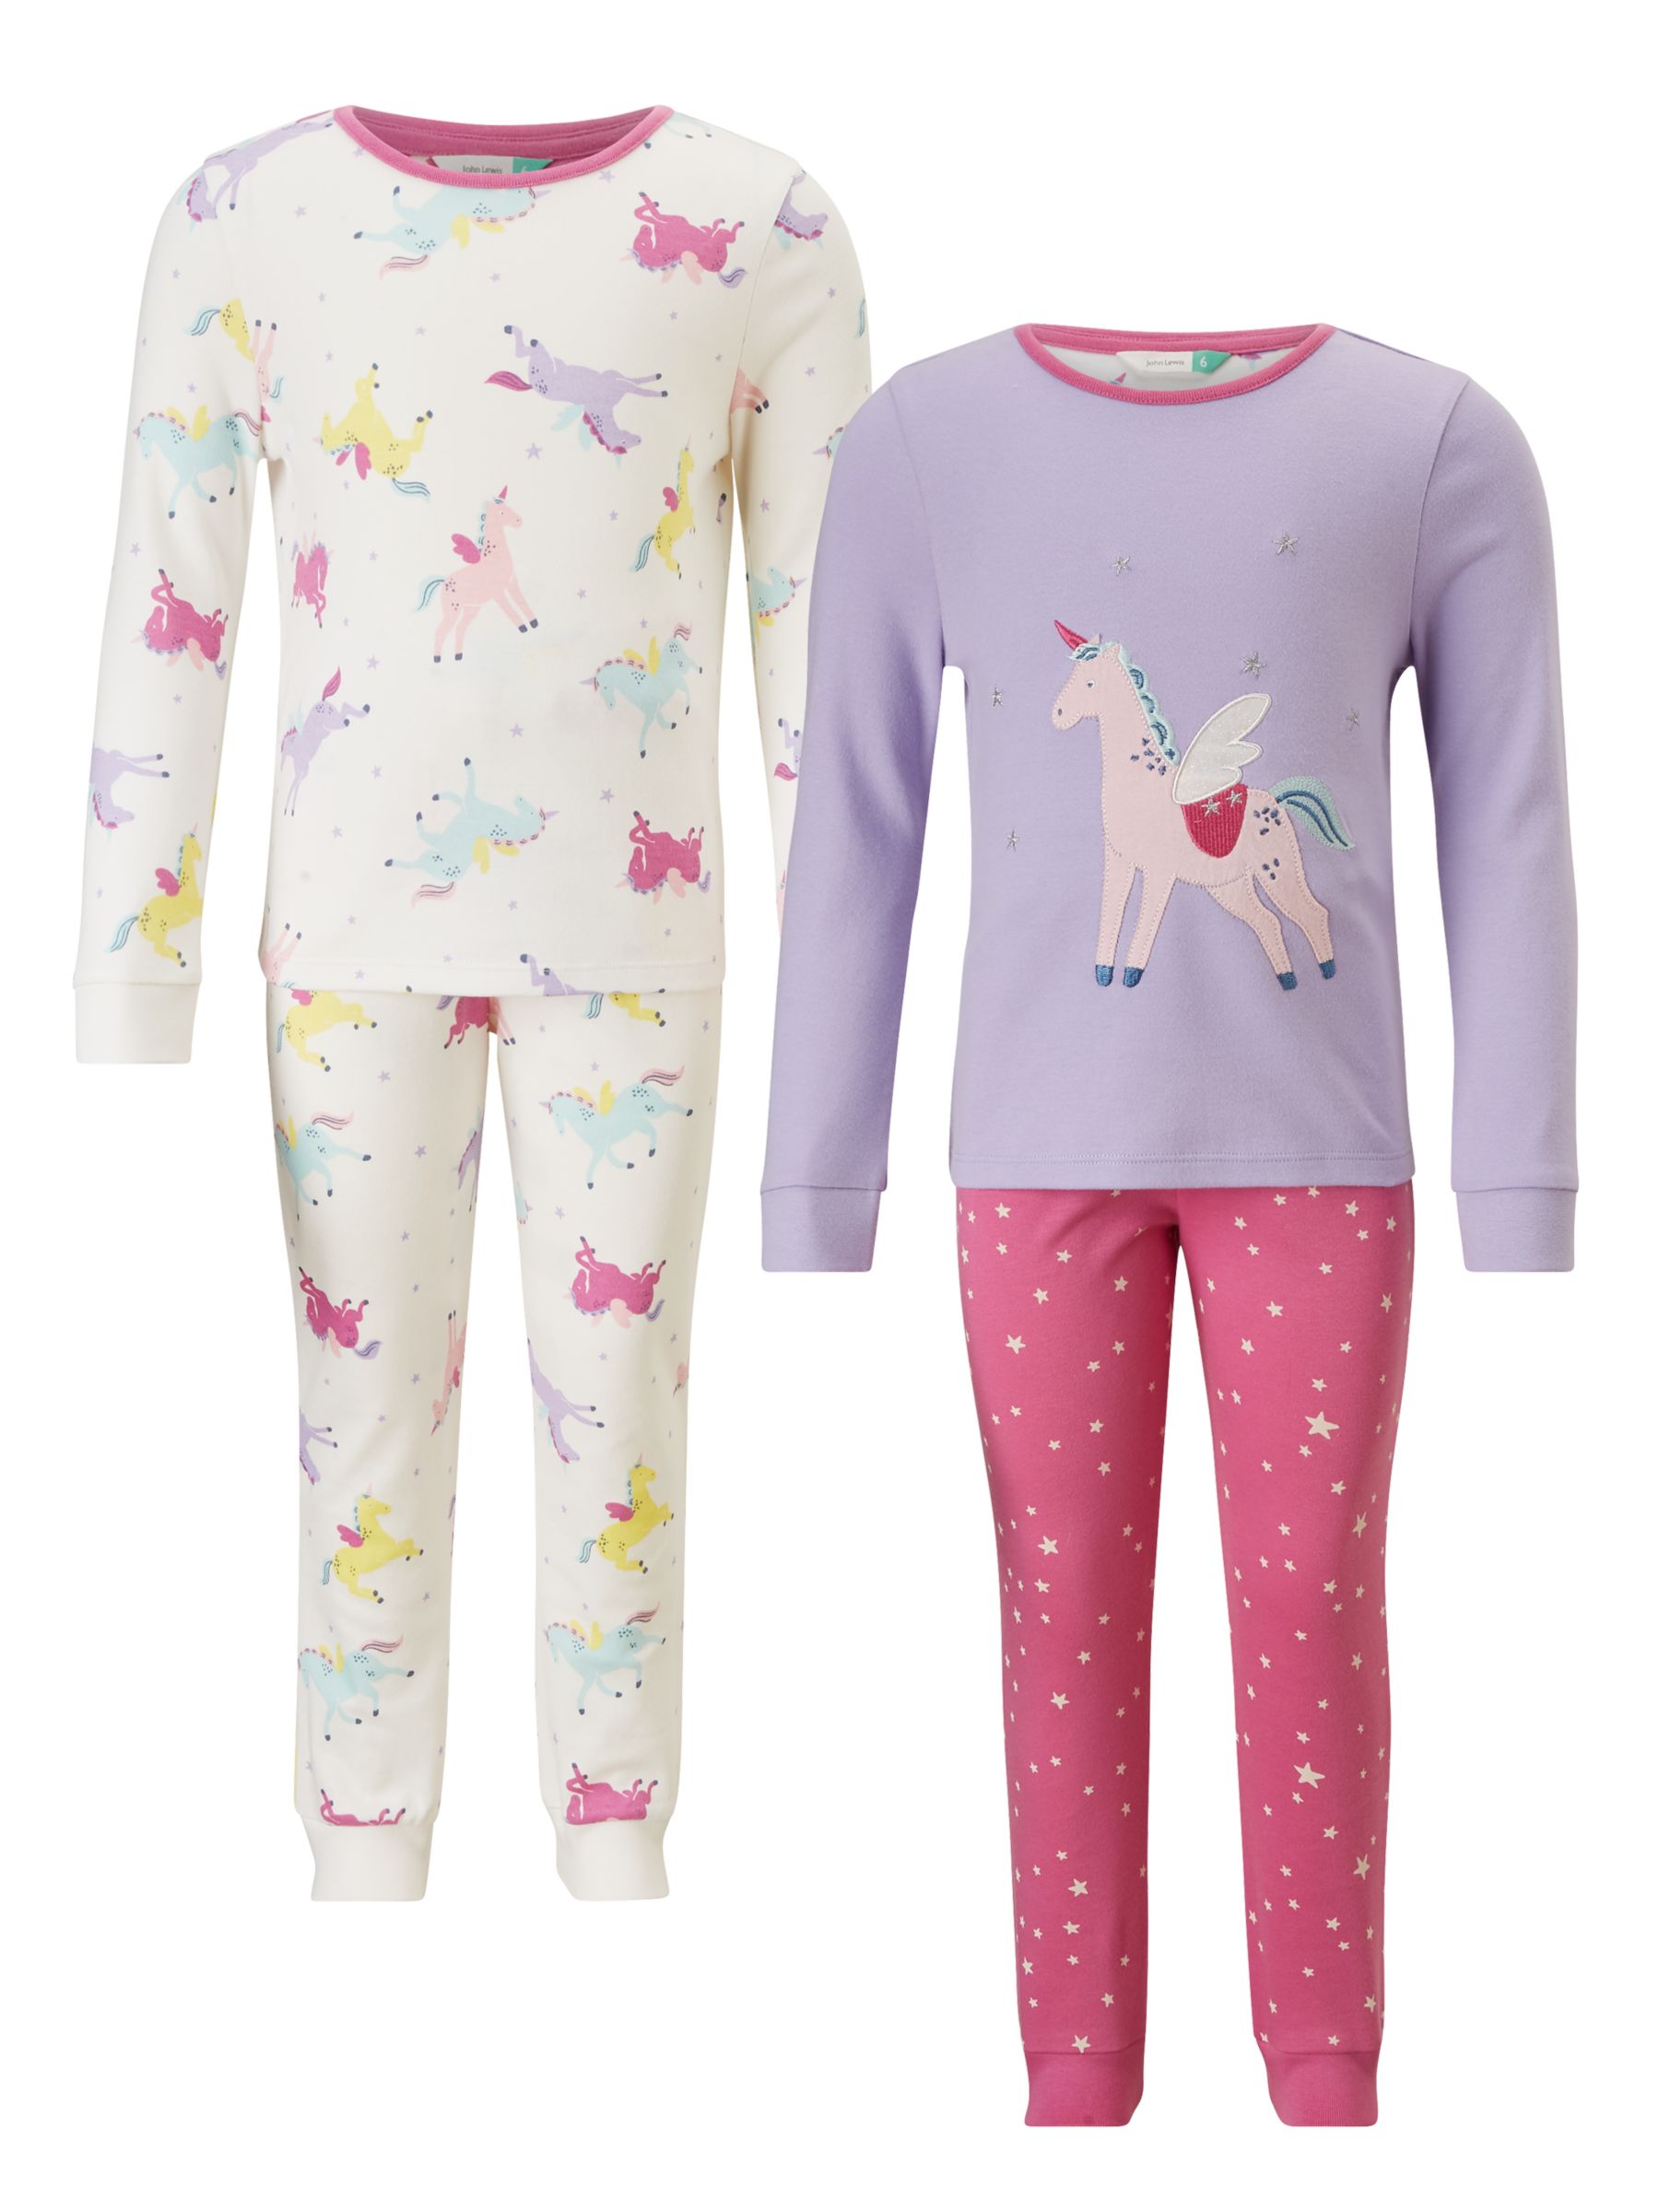 John Lewis Children's Unicorn Print Pyjamas Reviews